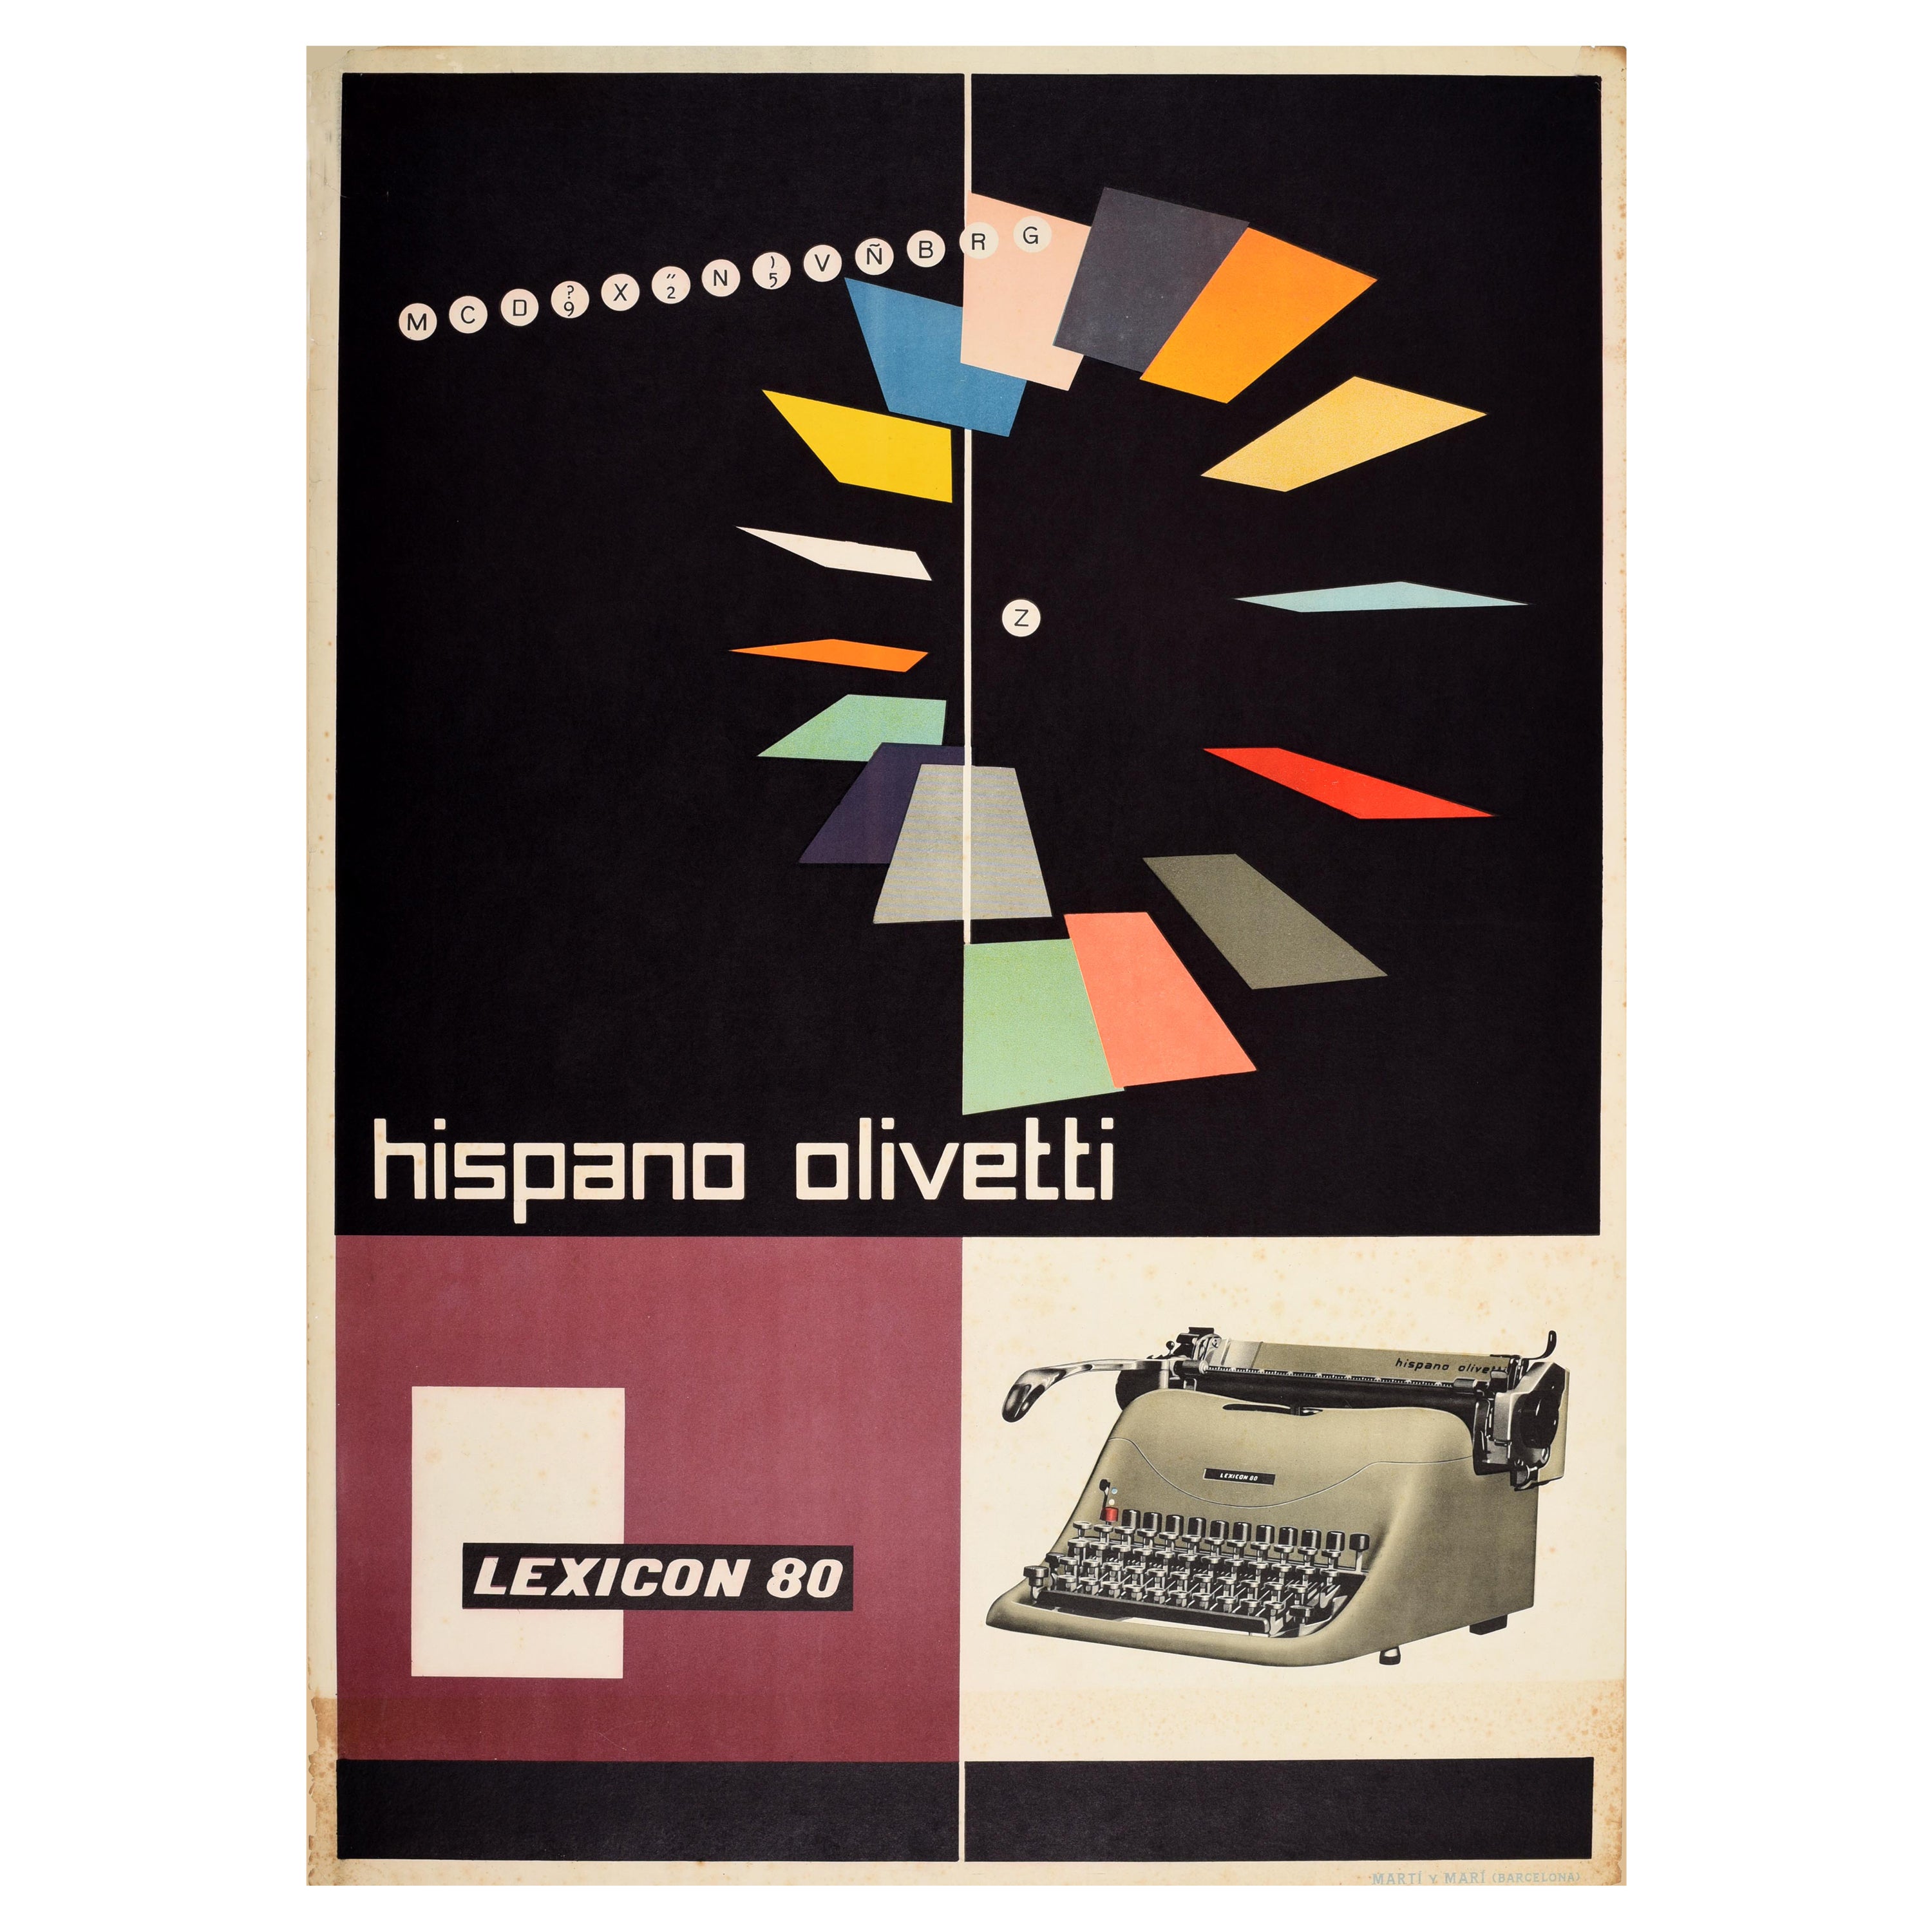 Affiche rétro originale Hispano Olivetti Lexicon 80 Typewriter Midcentury Modern